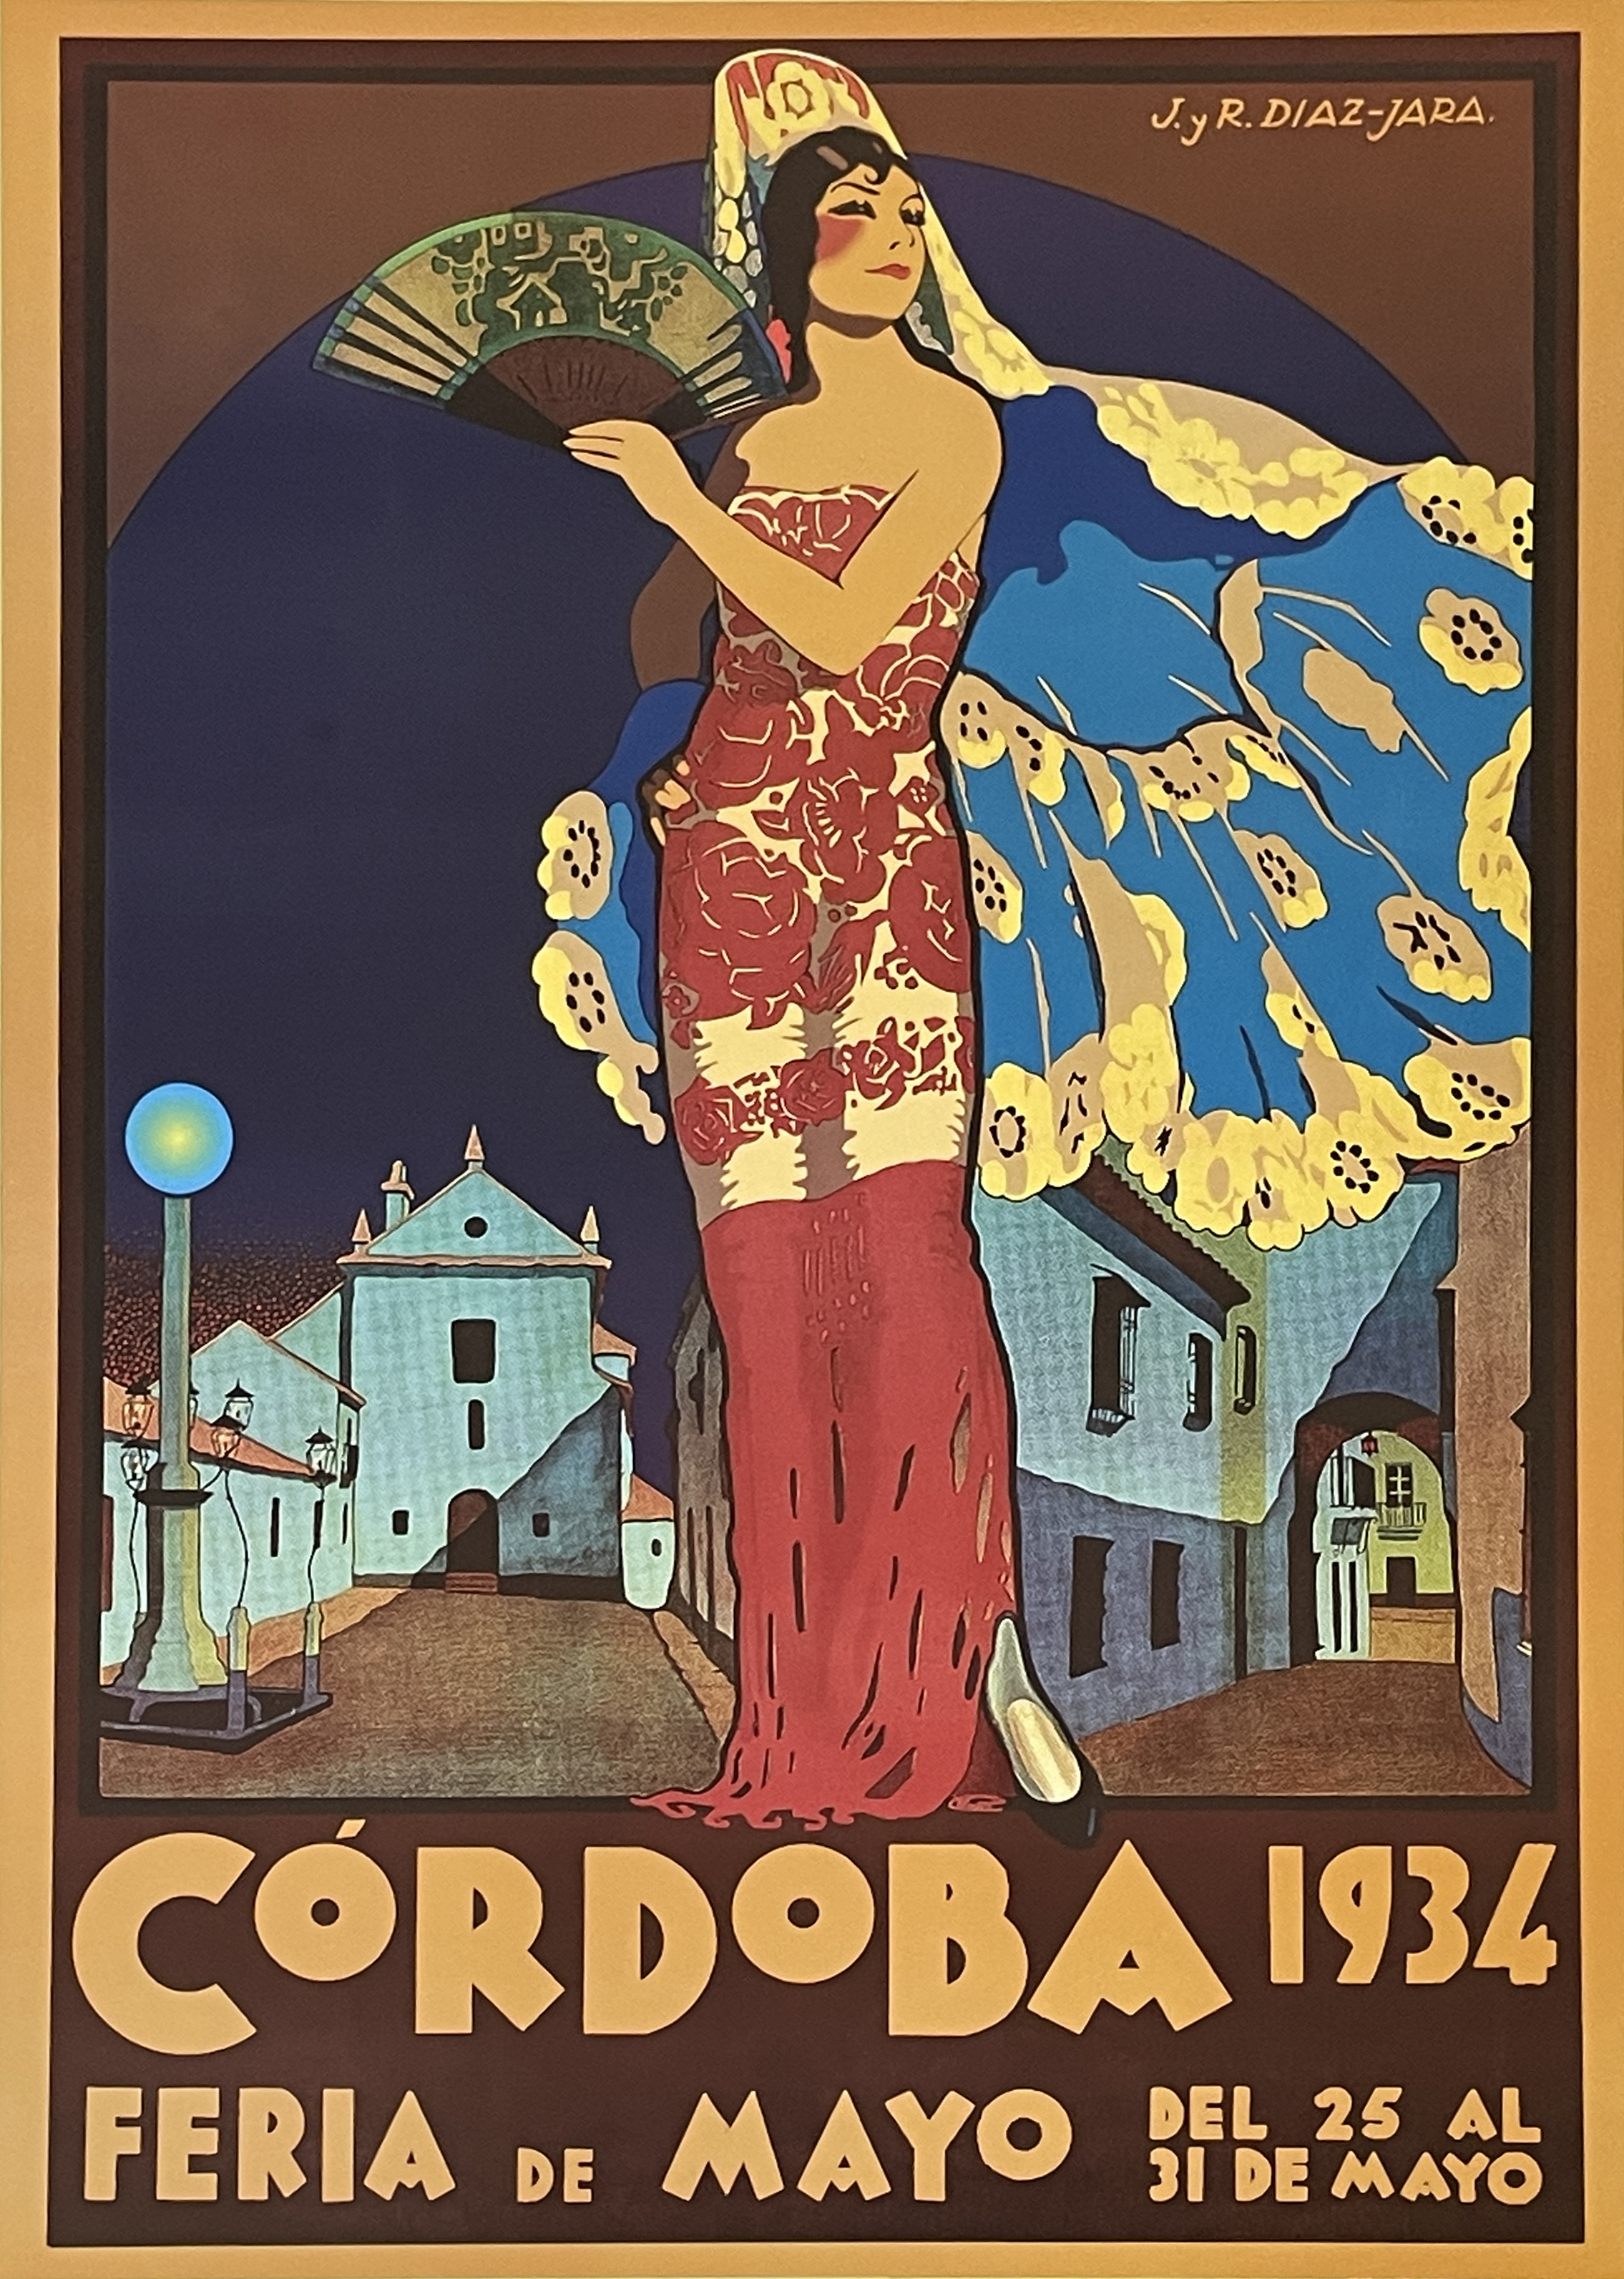 Cordoba 1934